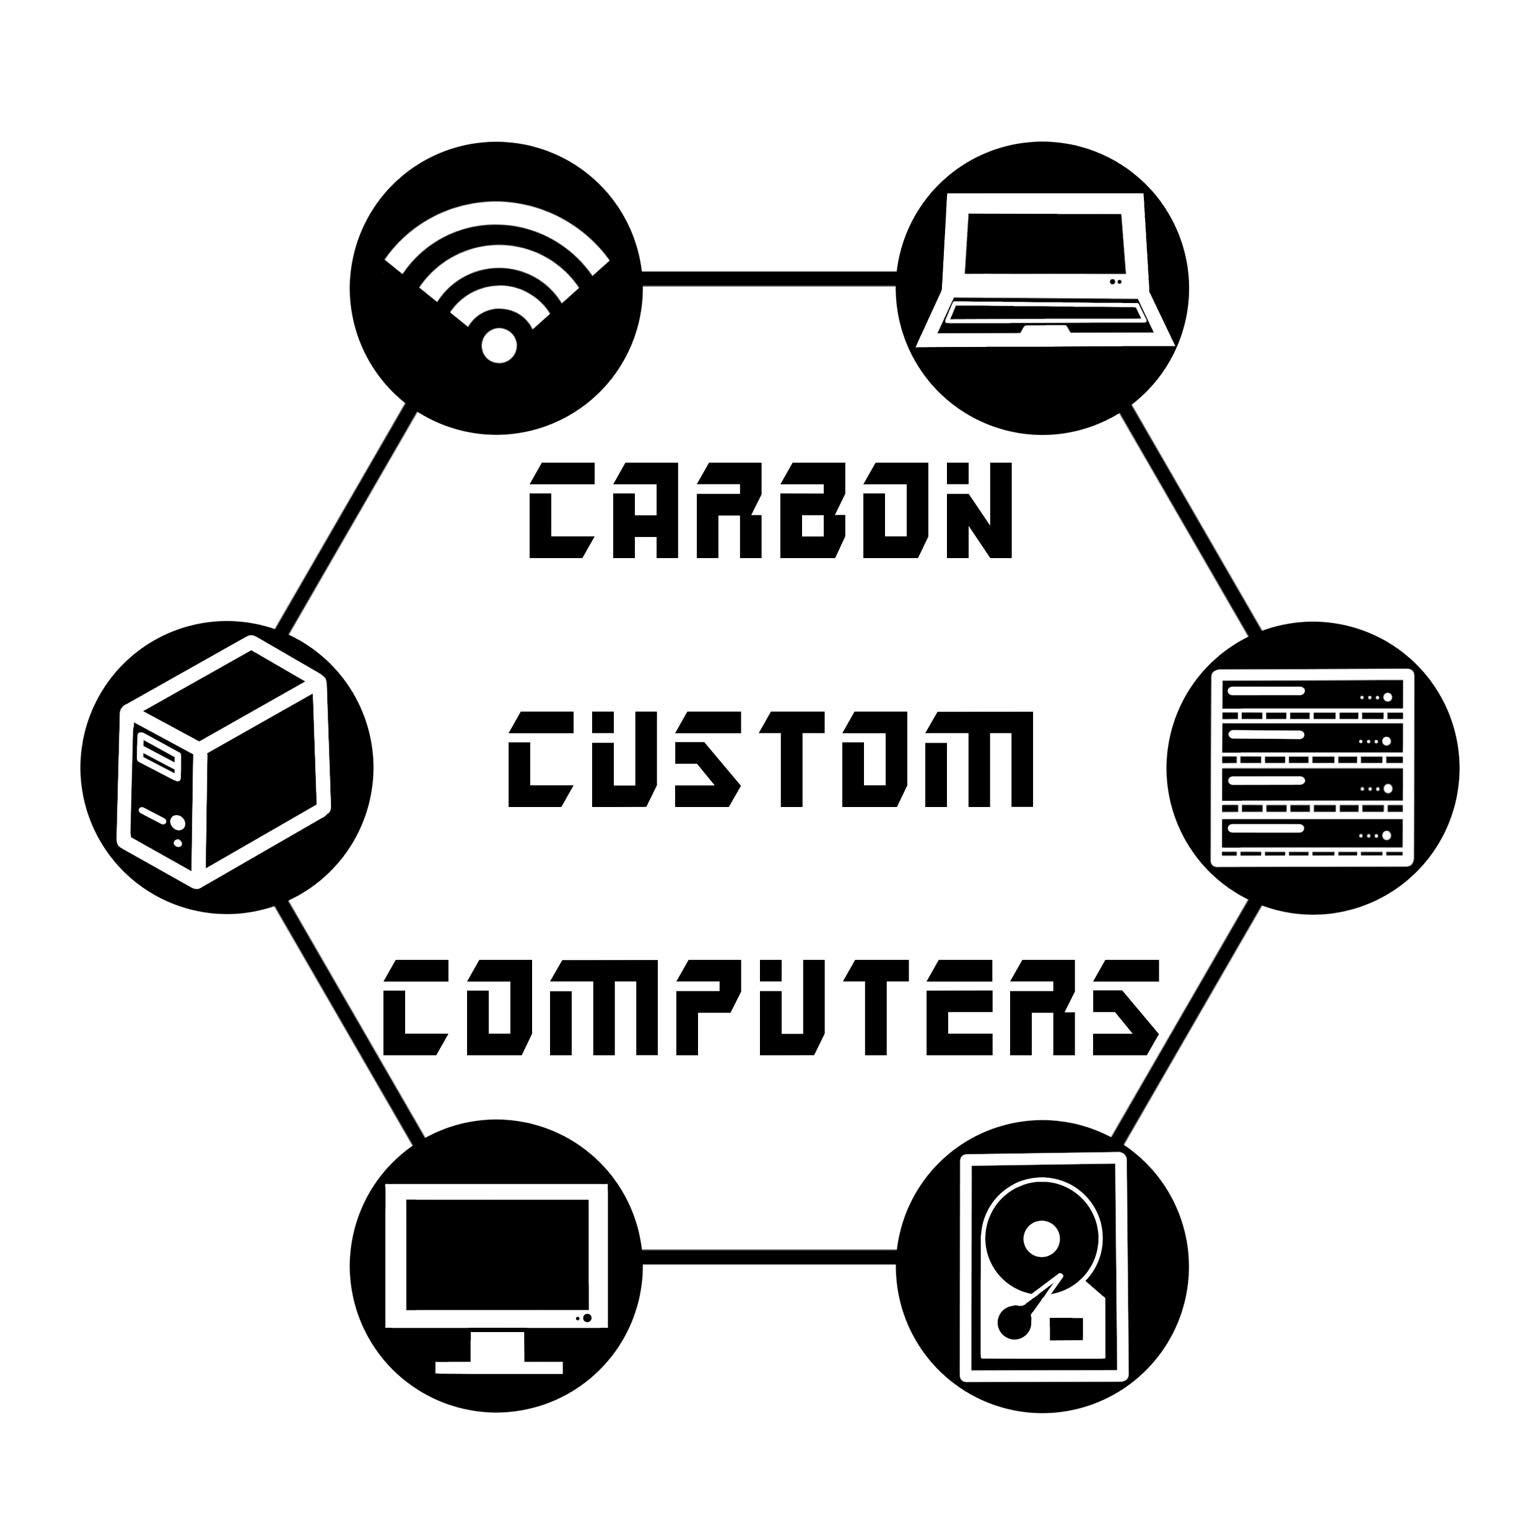 Carbon Custom Computers